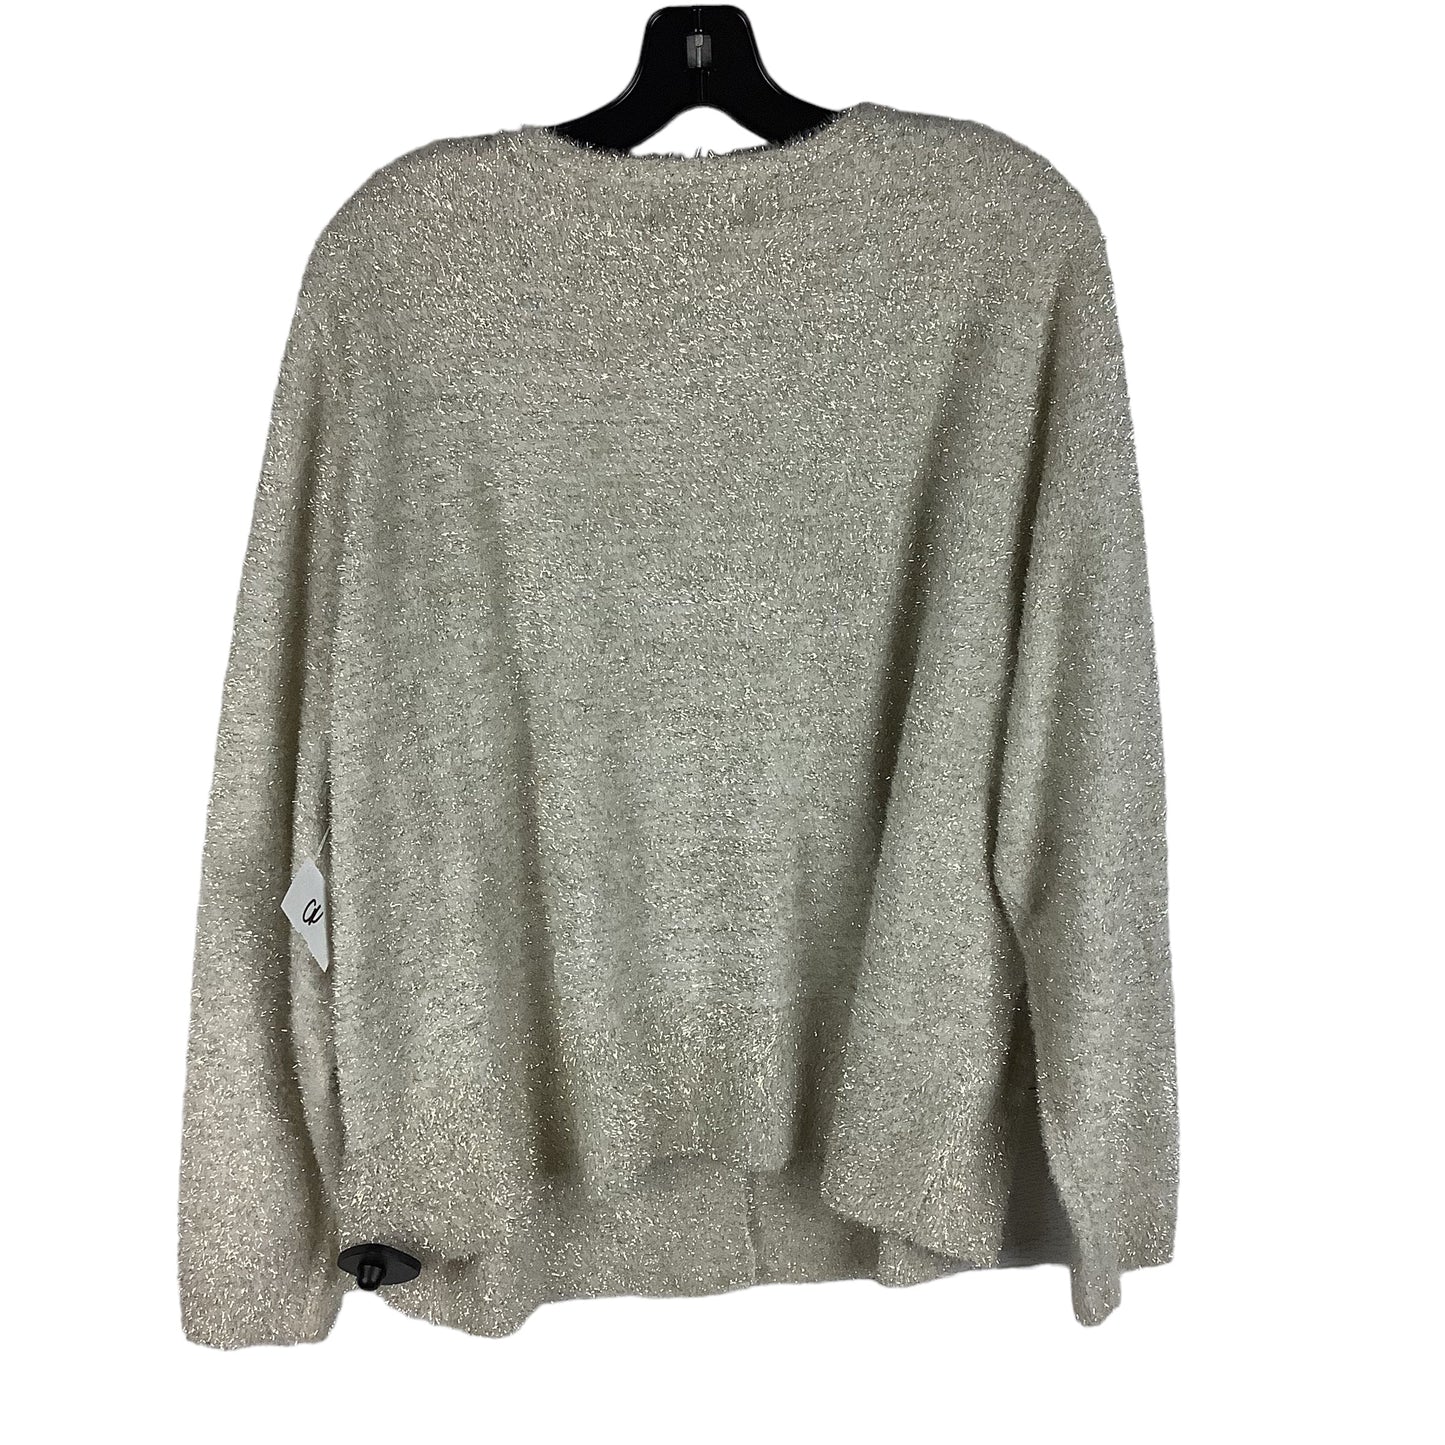 Cream Sweater Cardigan Old Navy, Size 2x